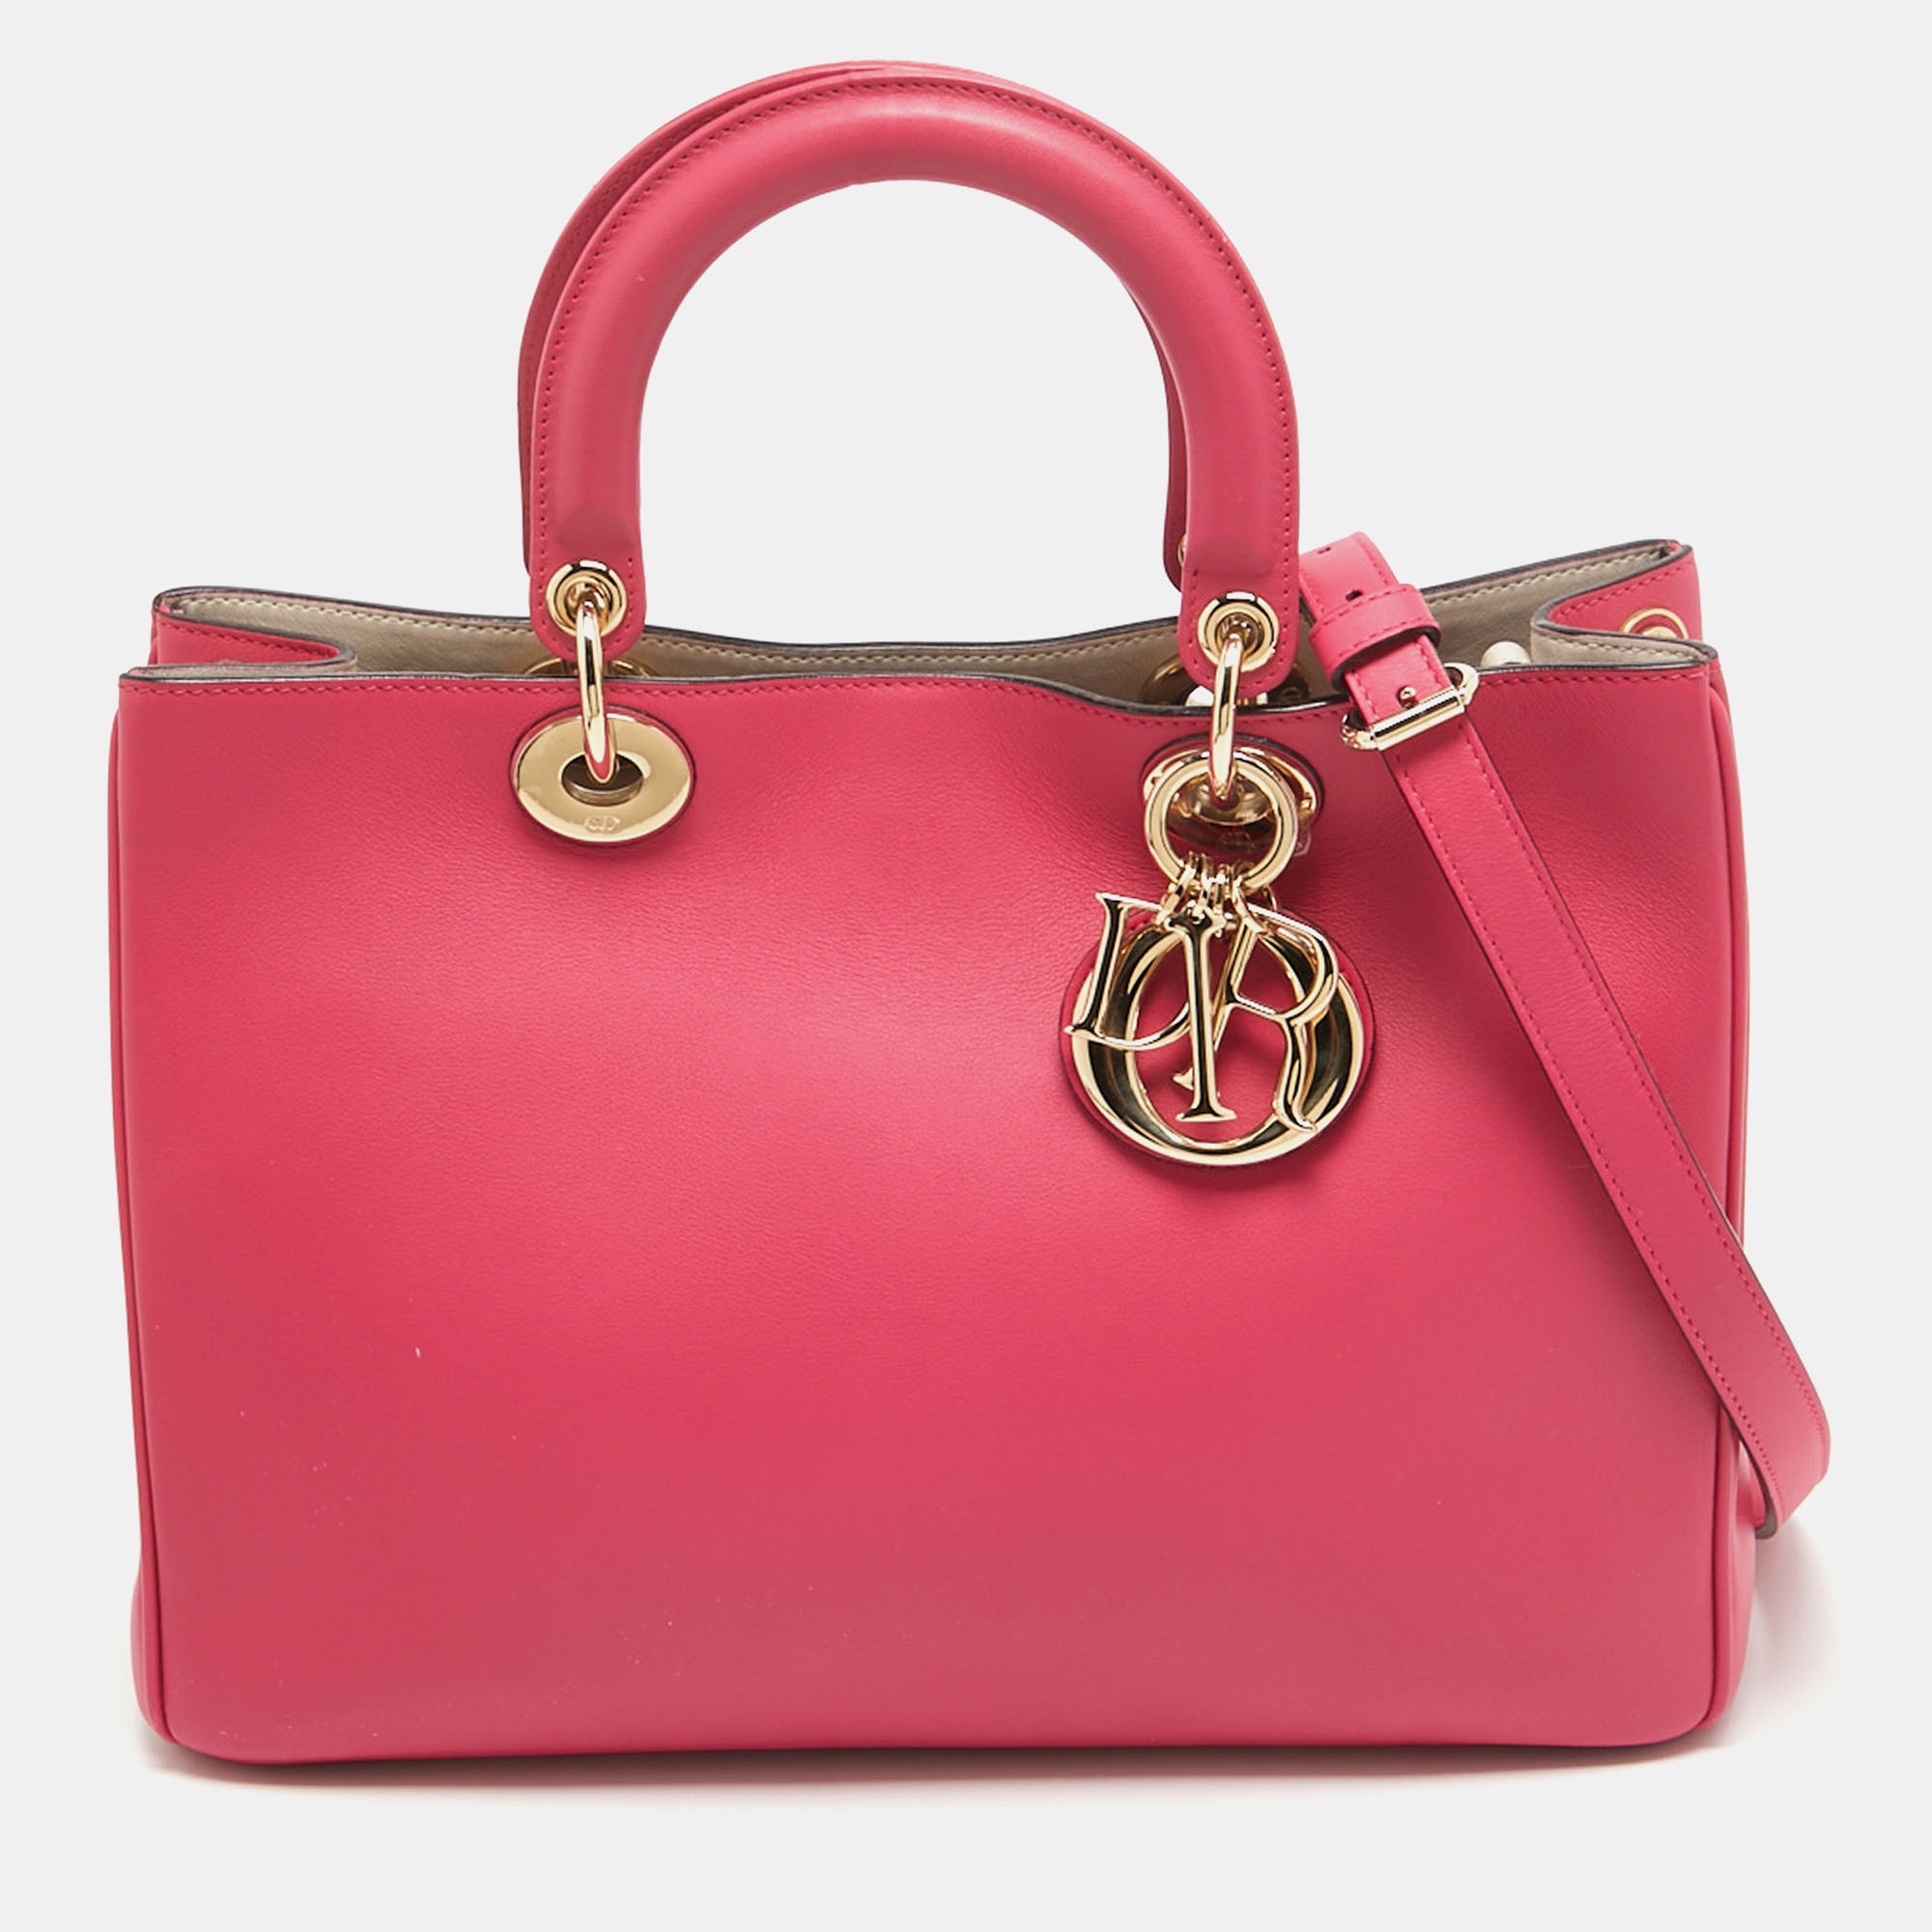 Dior pink leather medium diorissimo shopper tote